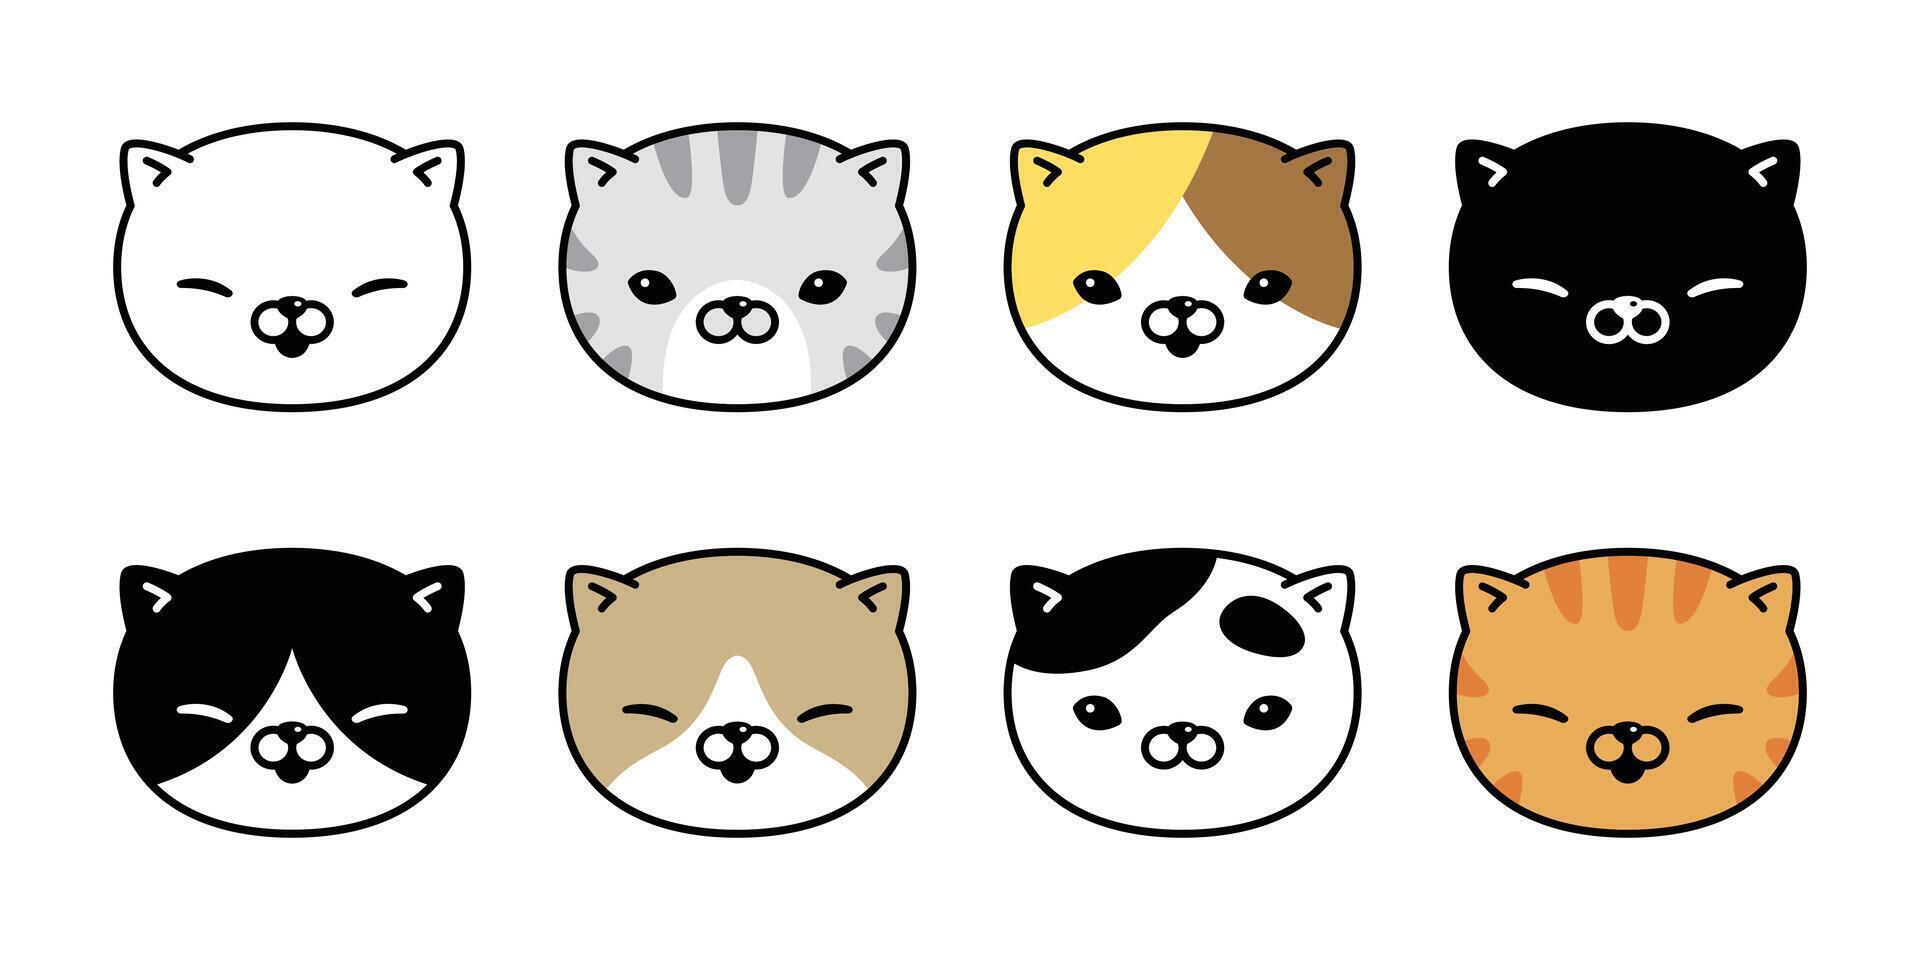 cat vector icon calico kitten breed logo symbol face head character cartoon doodle illustration design